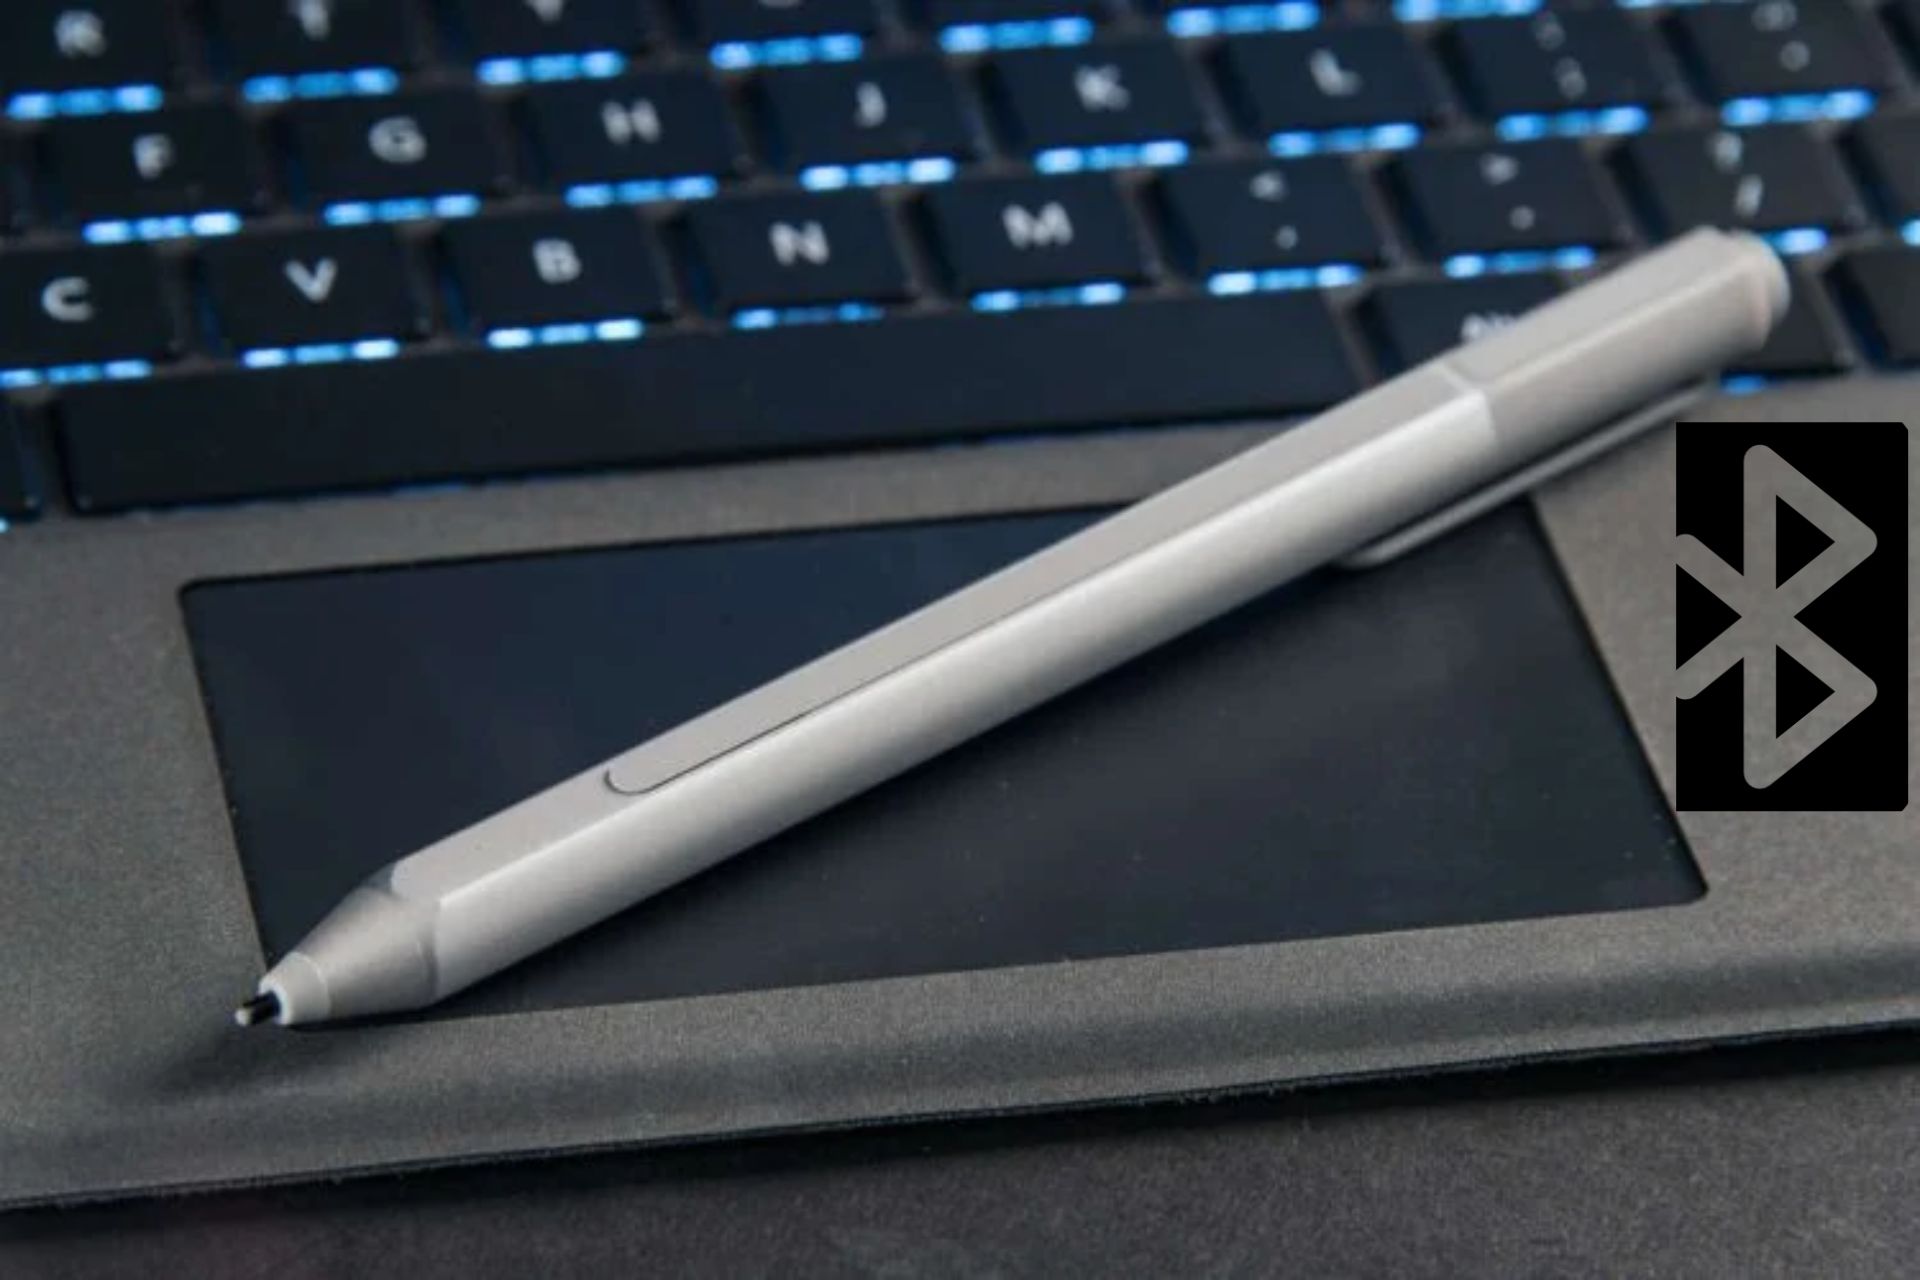 Surface pen not pairing